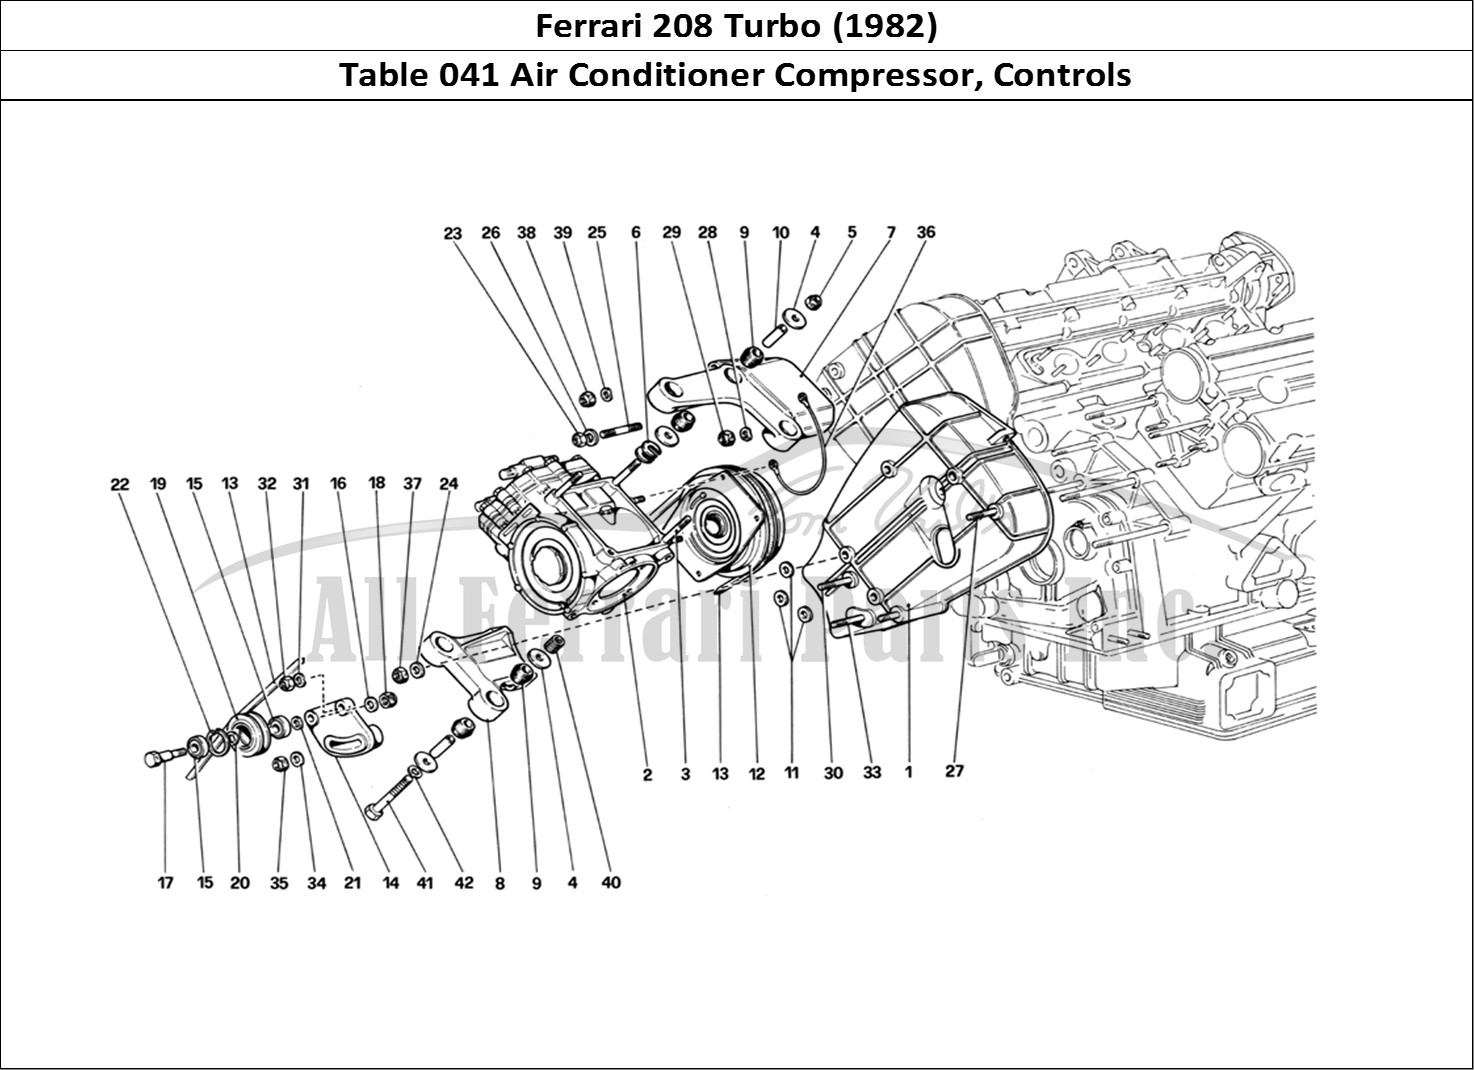 Ferrari Parts Ferrari 208 Turbo (1982) Page 041 Air Conditioning Compress